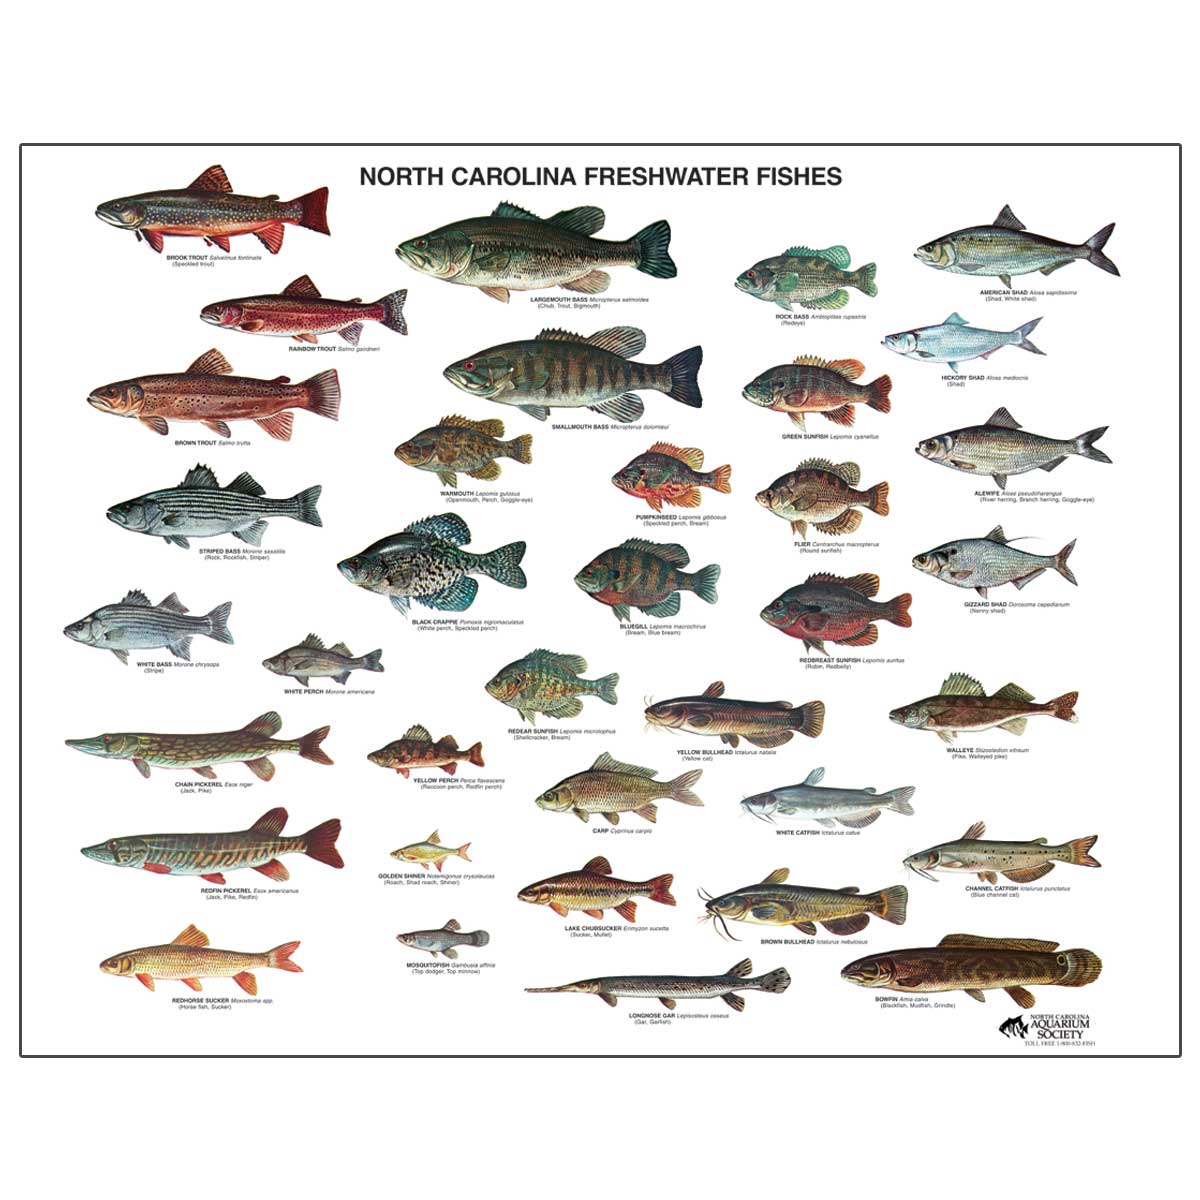 https://ncaquariumsociety.com/wp-content/uploads/2020/04/nca-nc-freshwater-fish-poster-web-2.jpg